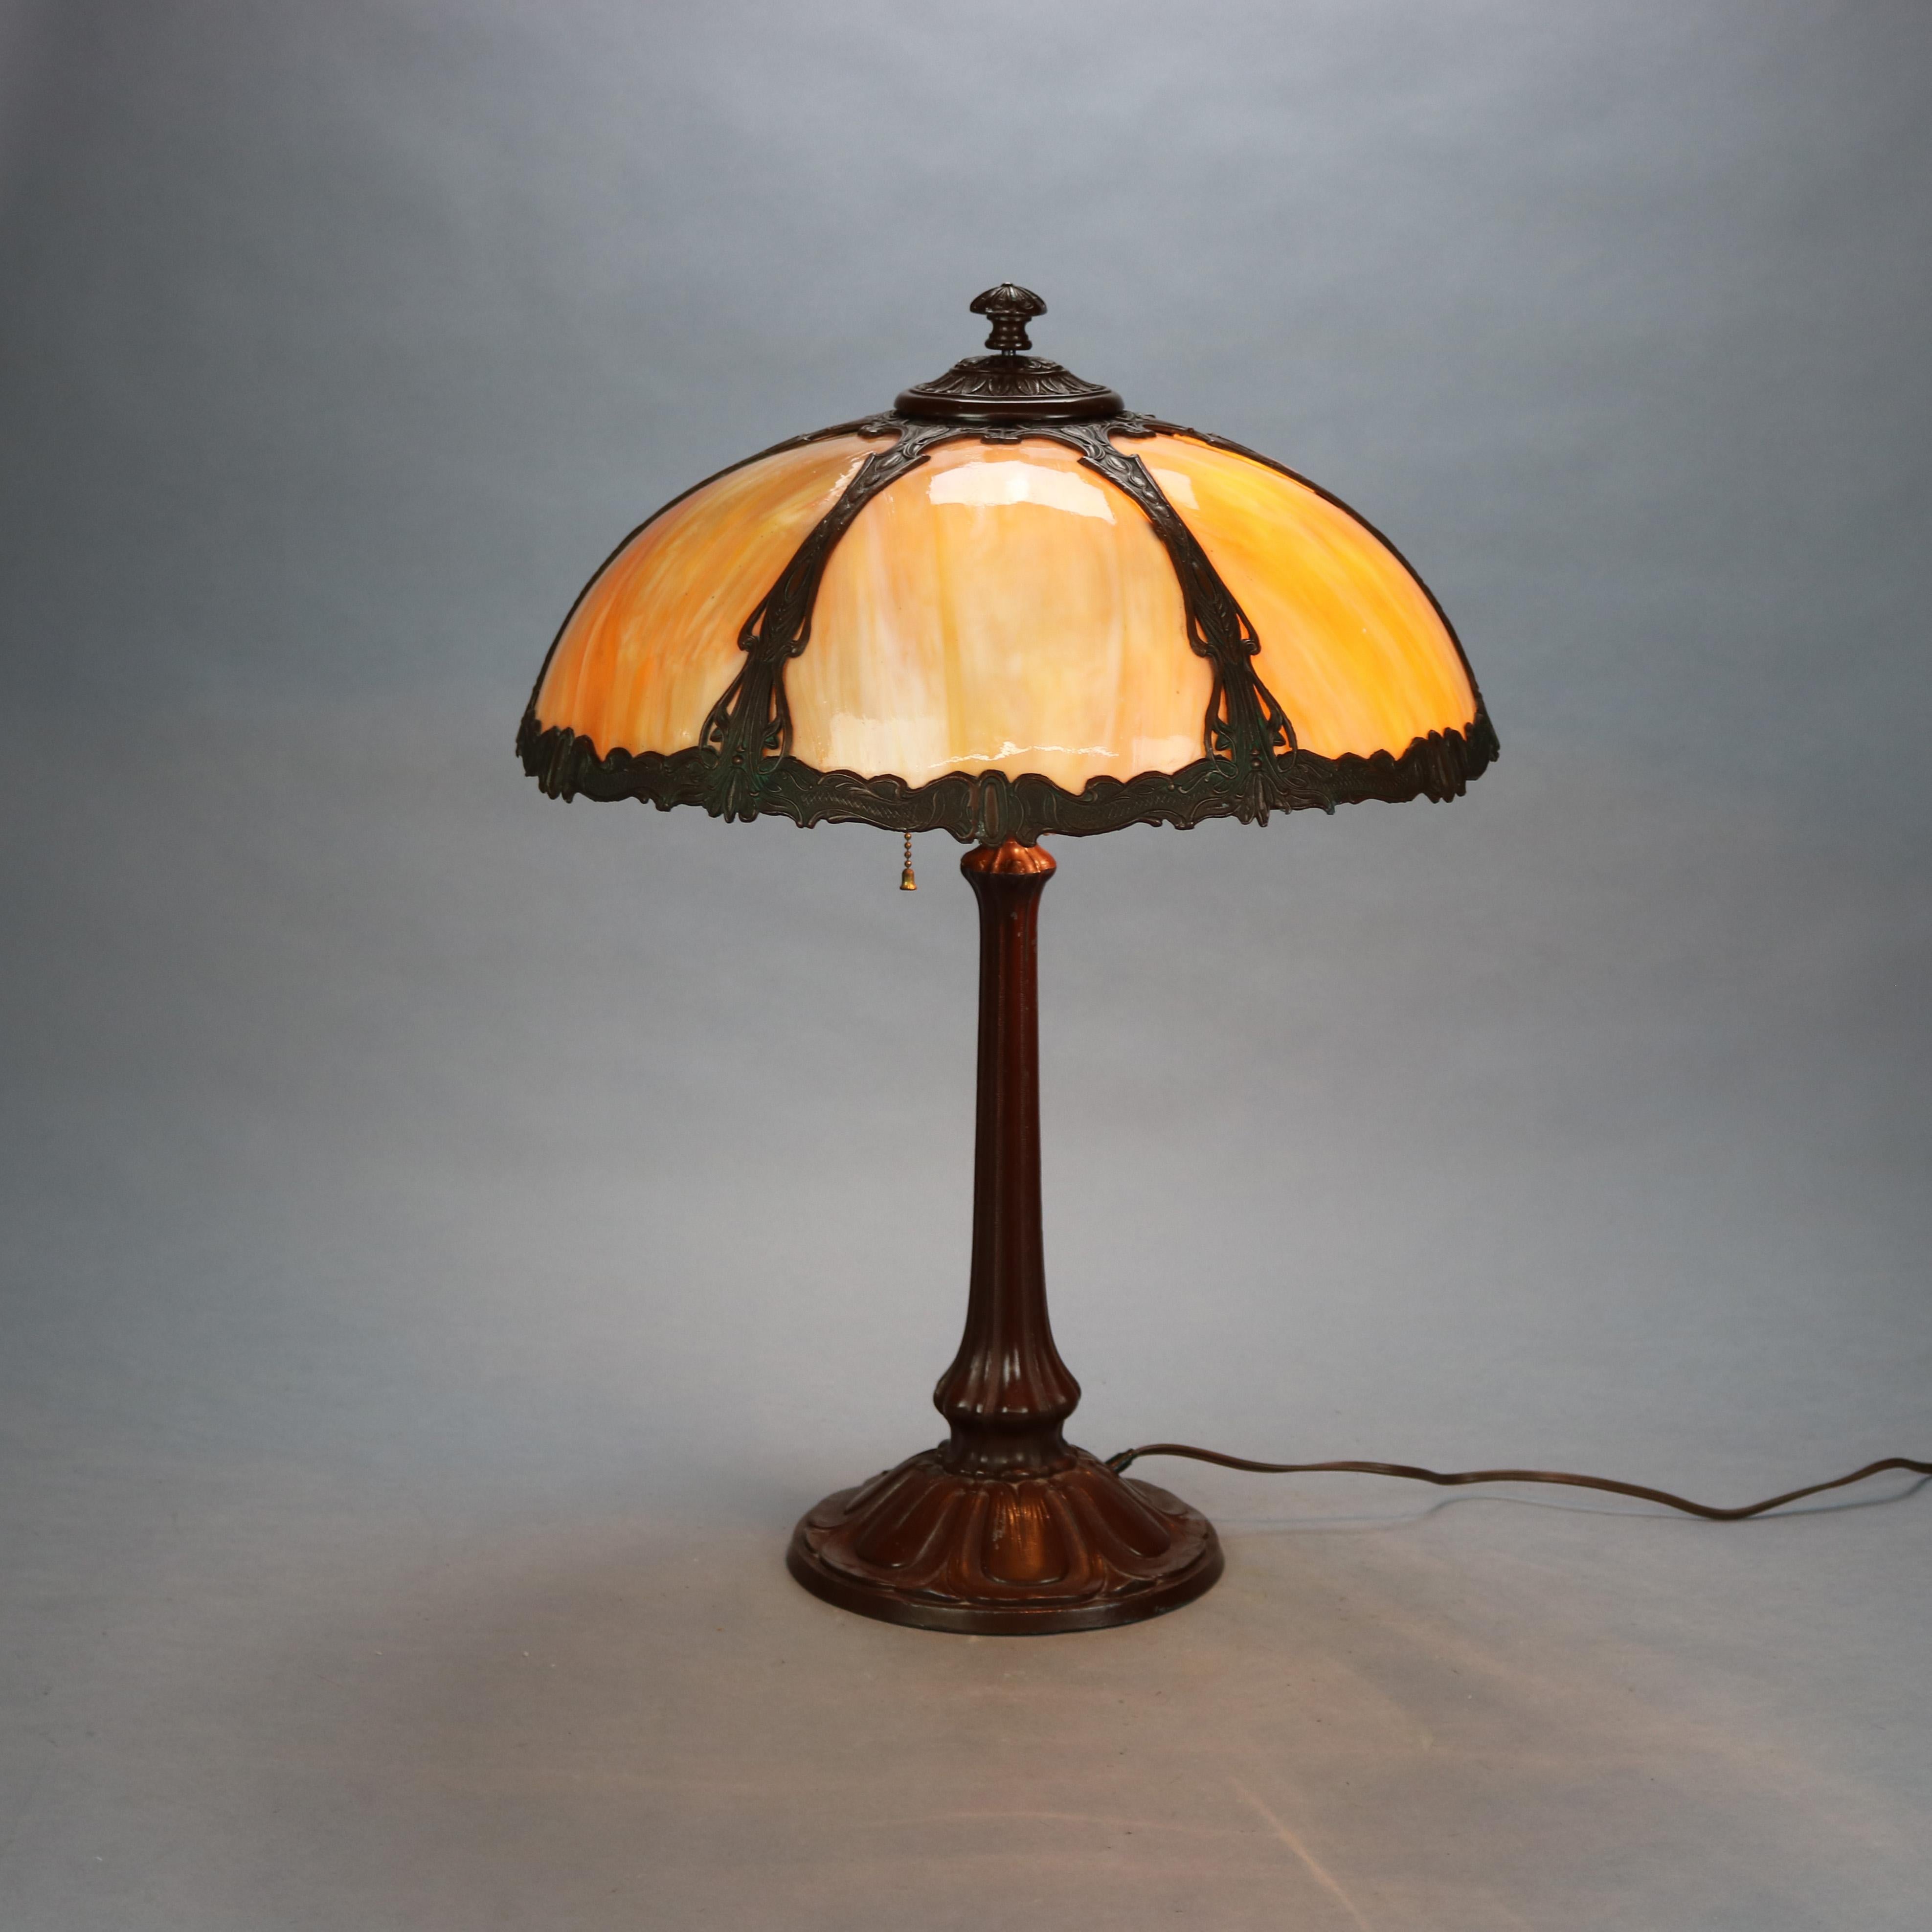 American Antique Art & Crafts Bradly & Hubbard School Slag Glass Lamp, Circa 1910